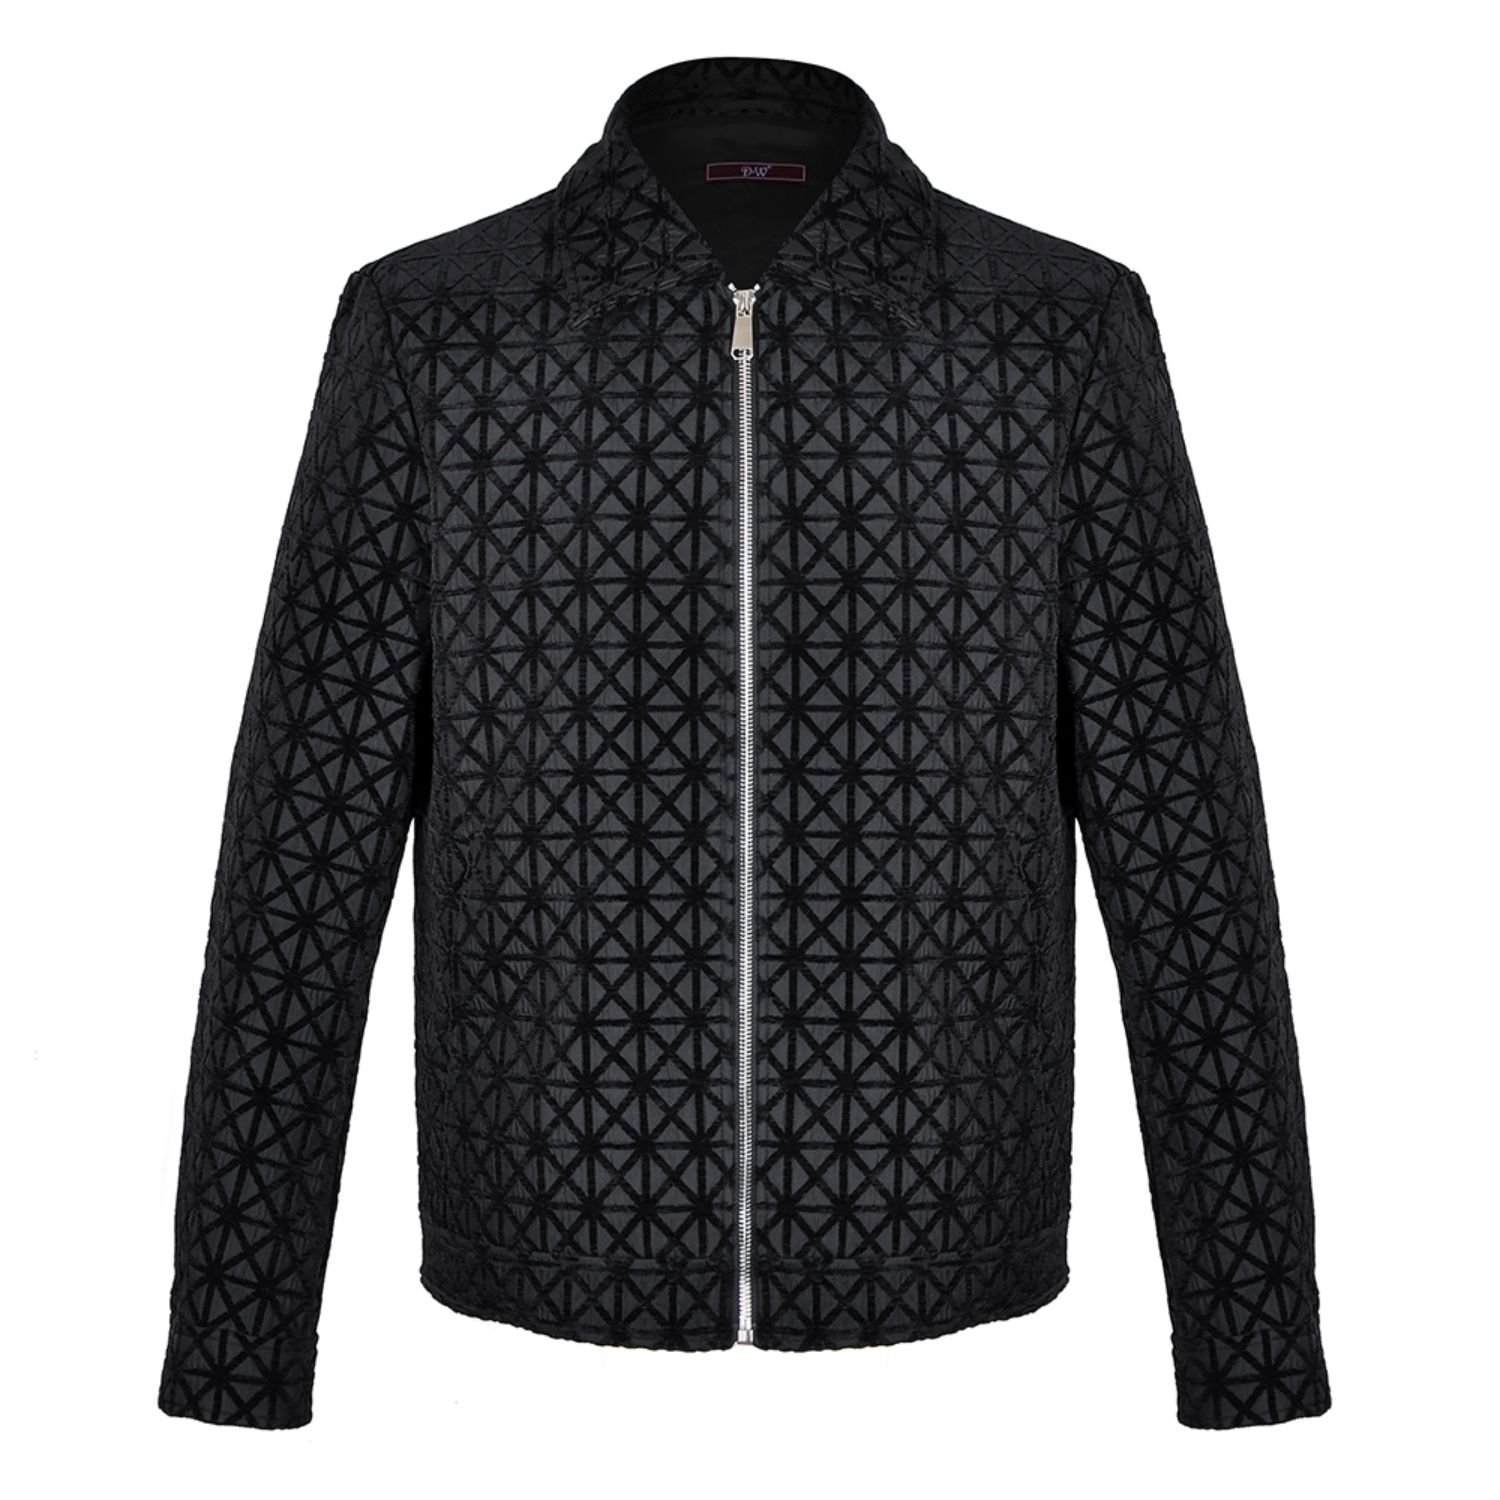 Men’s Kensington Luxury Velvet Jacquard Jacket - Black Small David Wej